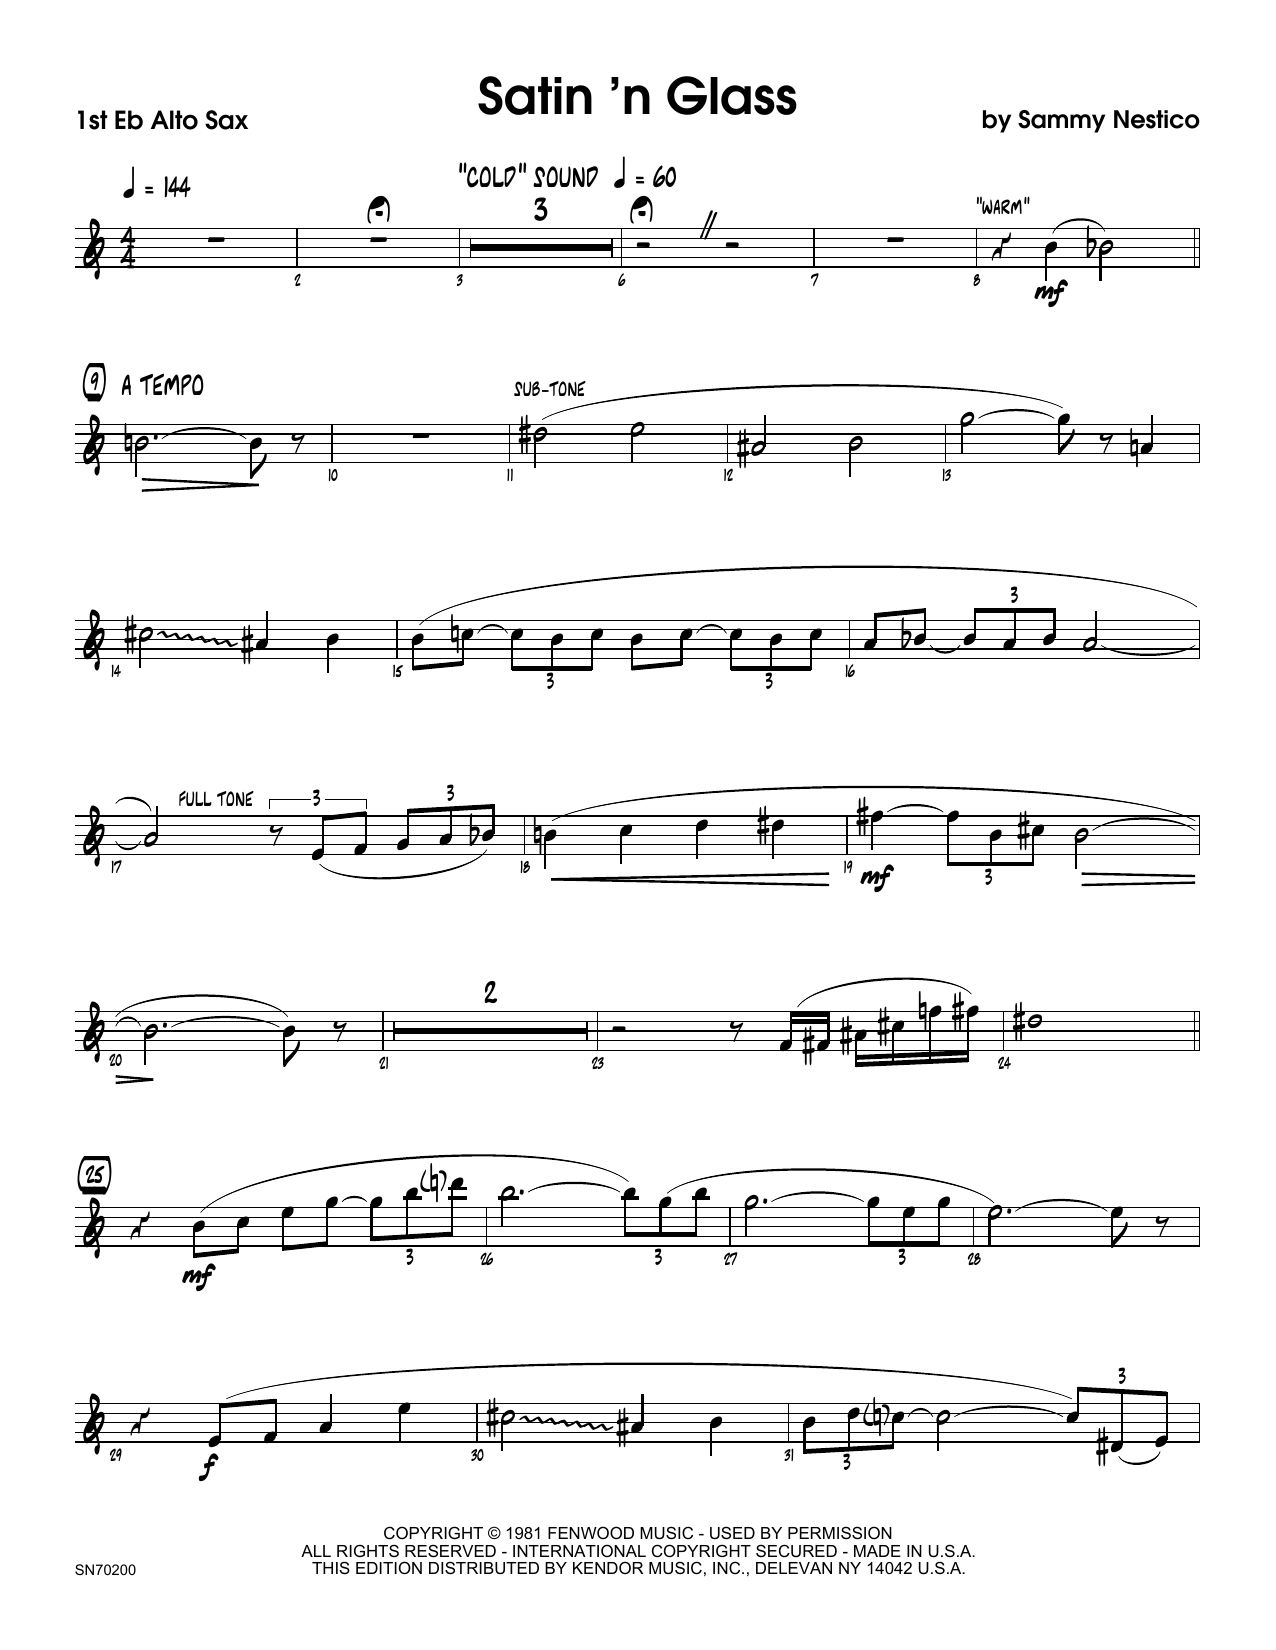 Download Sammy Nestico Satin 'n Glass - 1st Eb Alto Saxophone Sheet Music